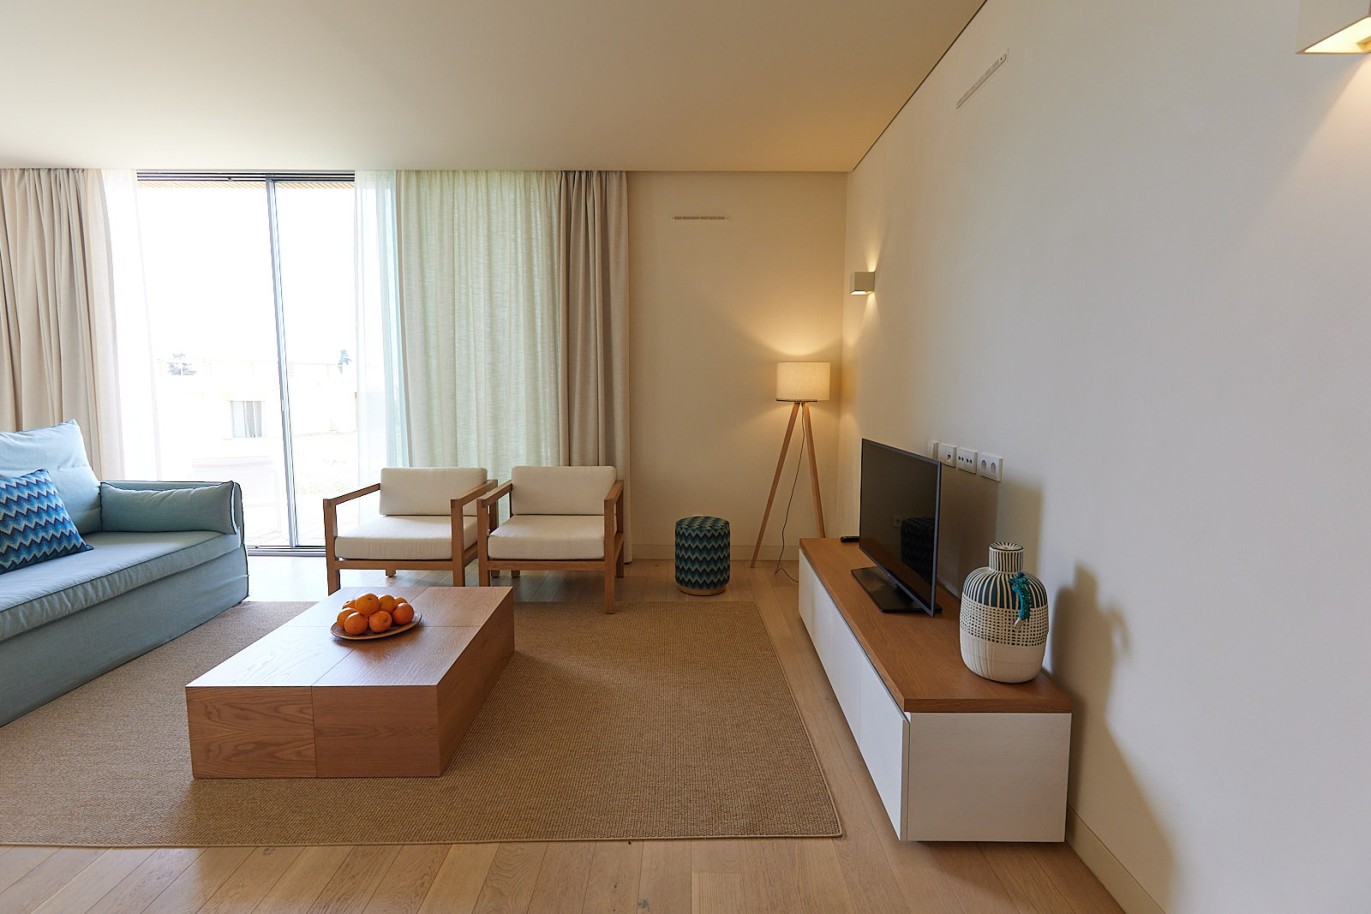 2 bedroom apartment in resort, for sale in Porches, Algarve_228799